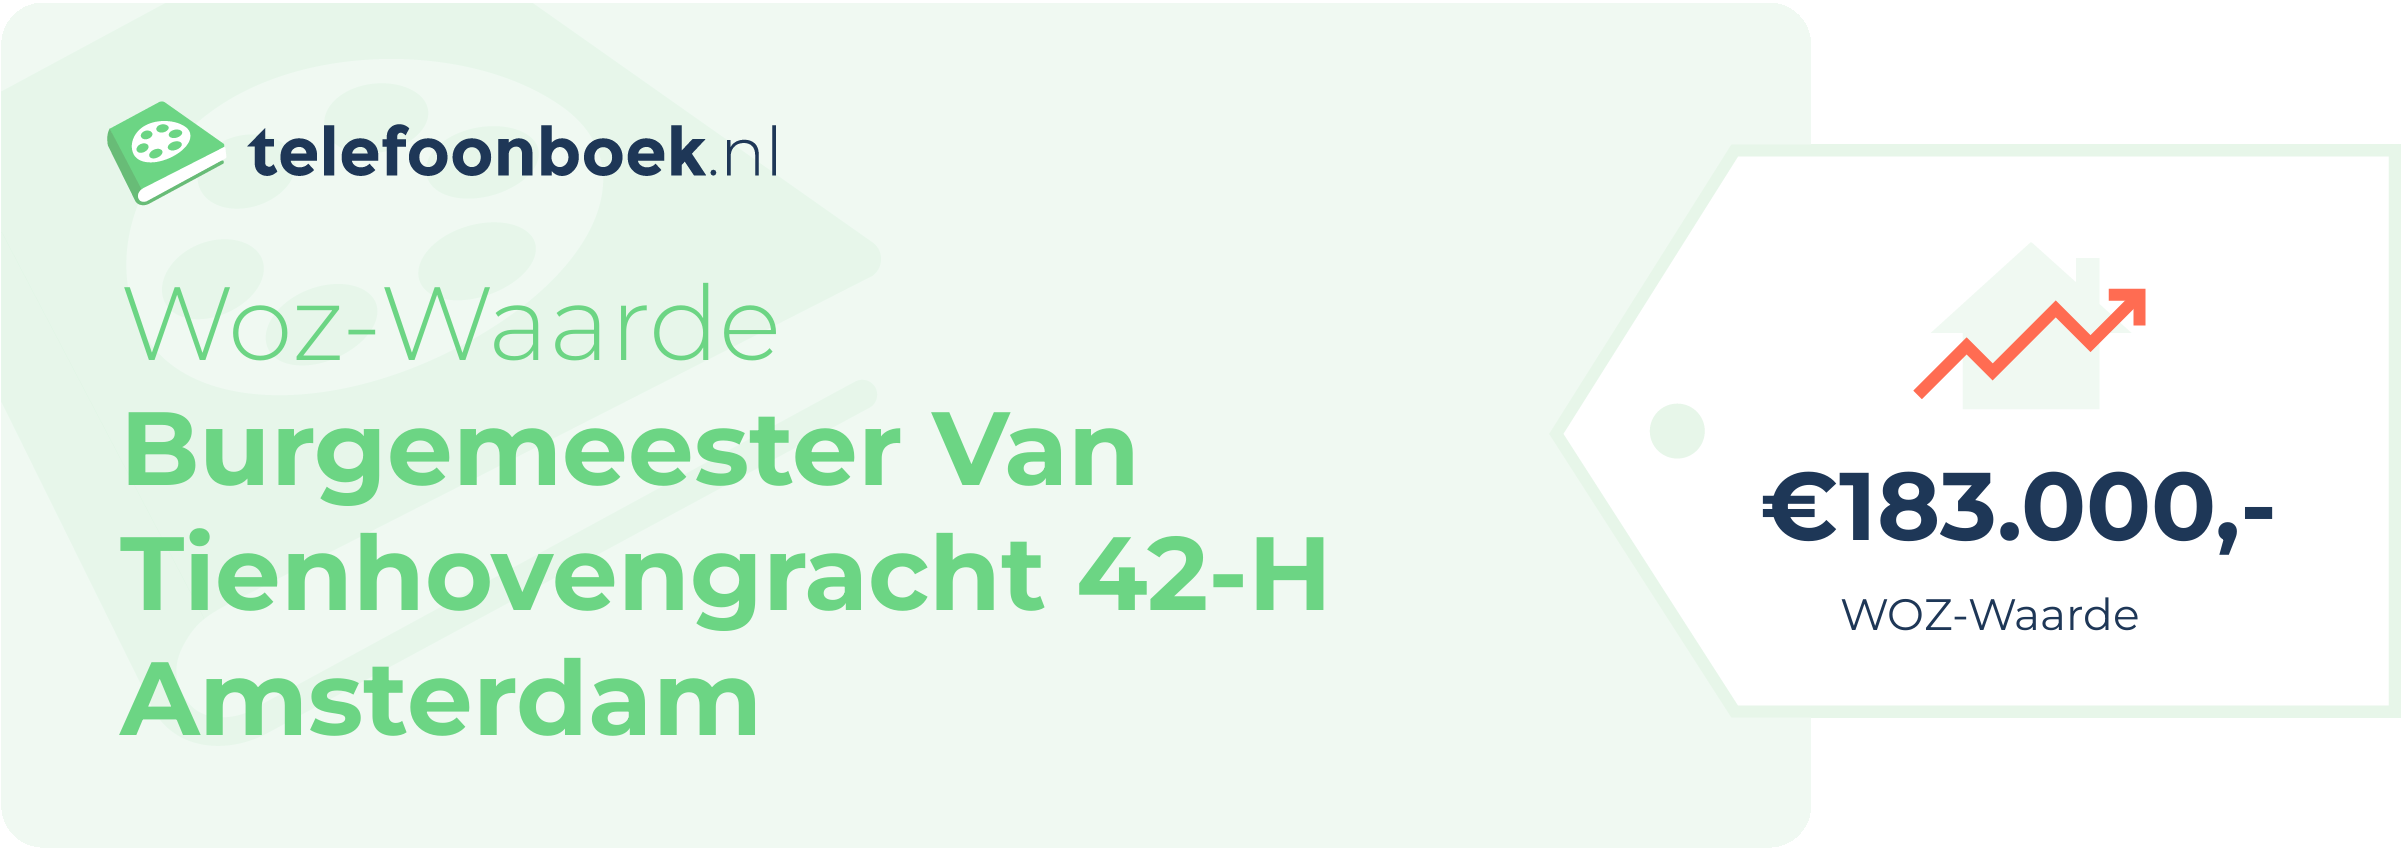 WOZ-waarde Burgemeester Van Tienhovengracht 42-H Amsterdam